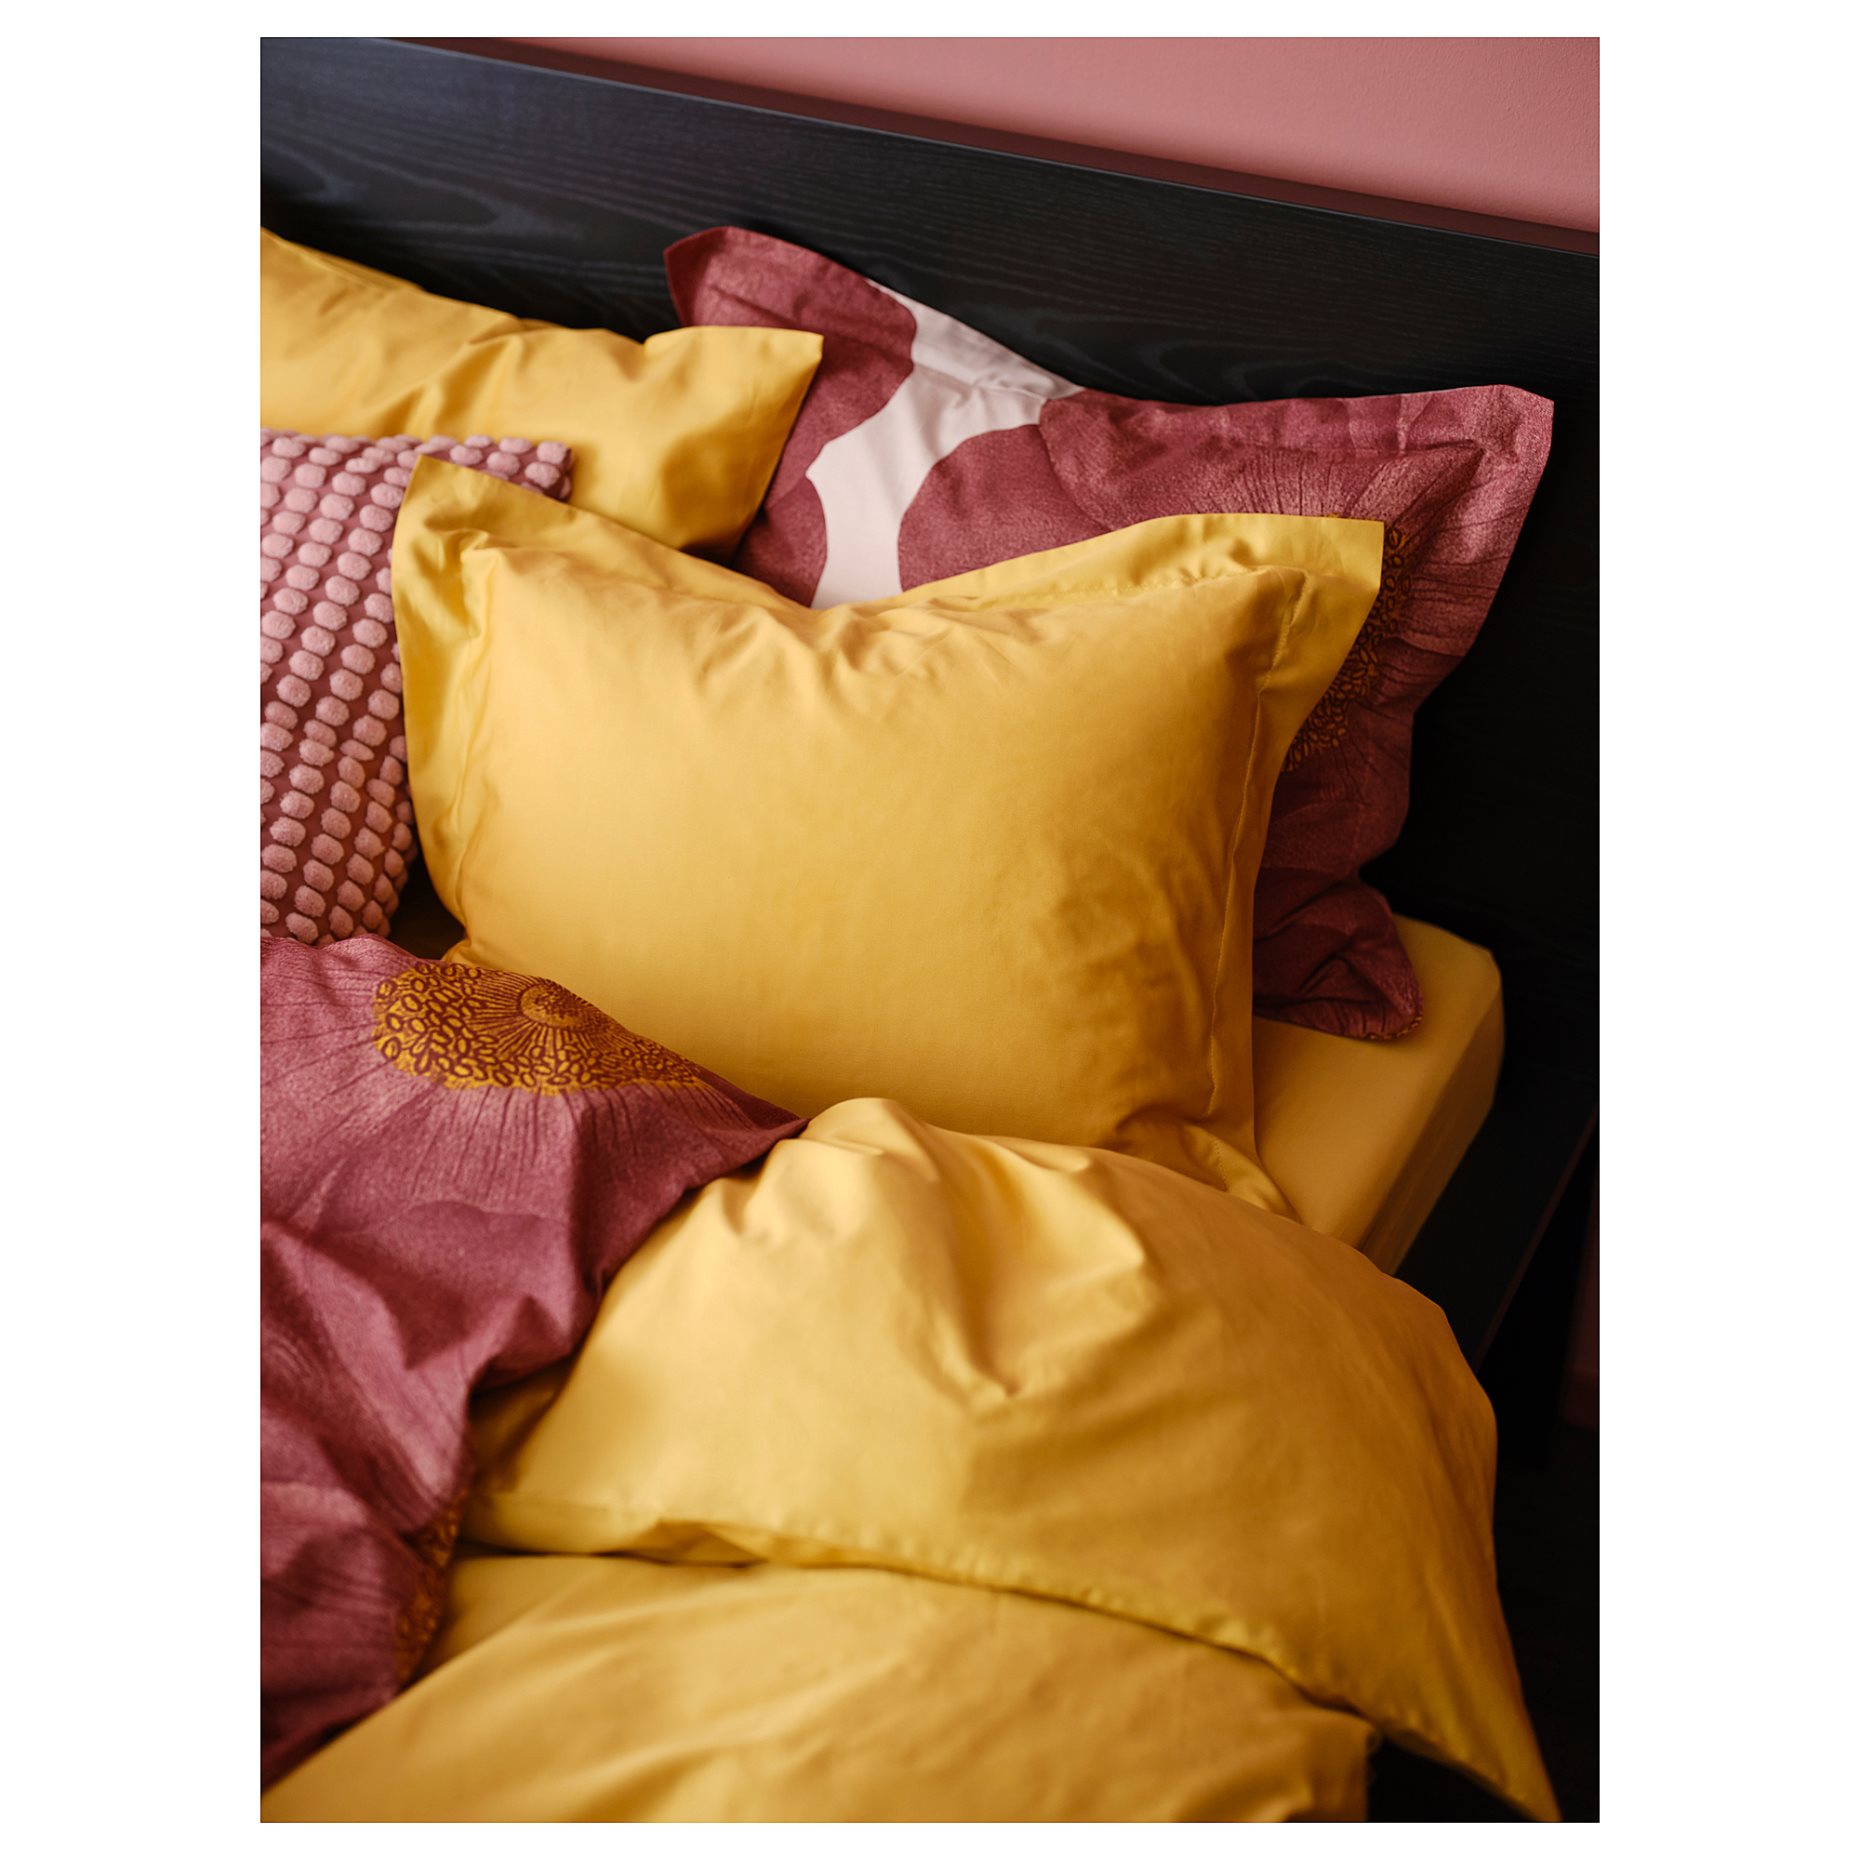 LUKTJASMIN, duvet cover and 2 pillowcases, 240x220/50x60 cm, 005.410.98